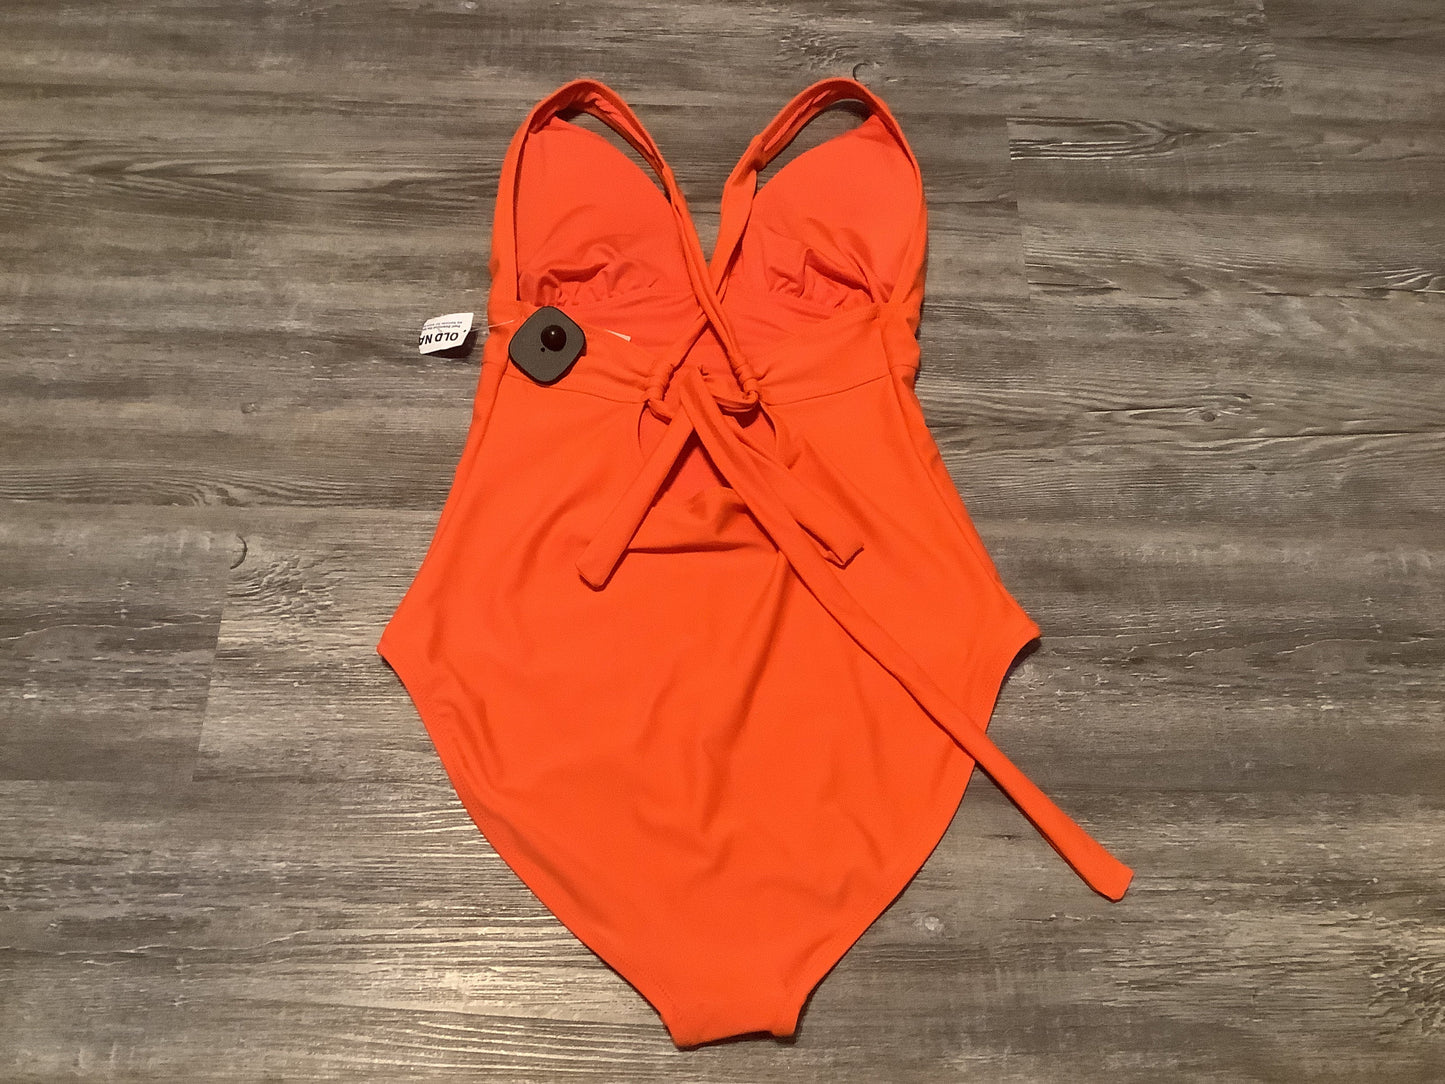 Orange Swimsuit Old Navy, Size M